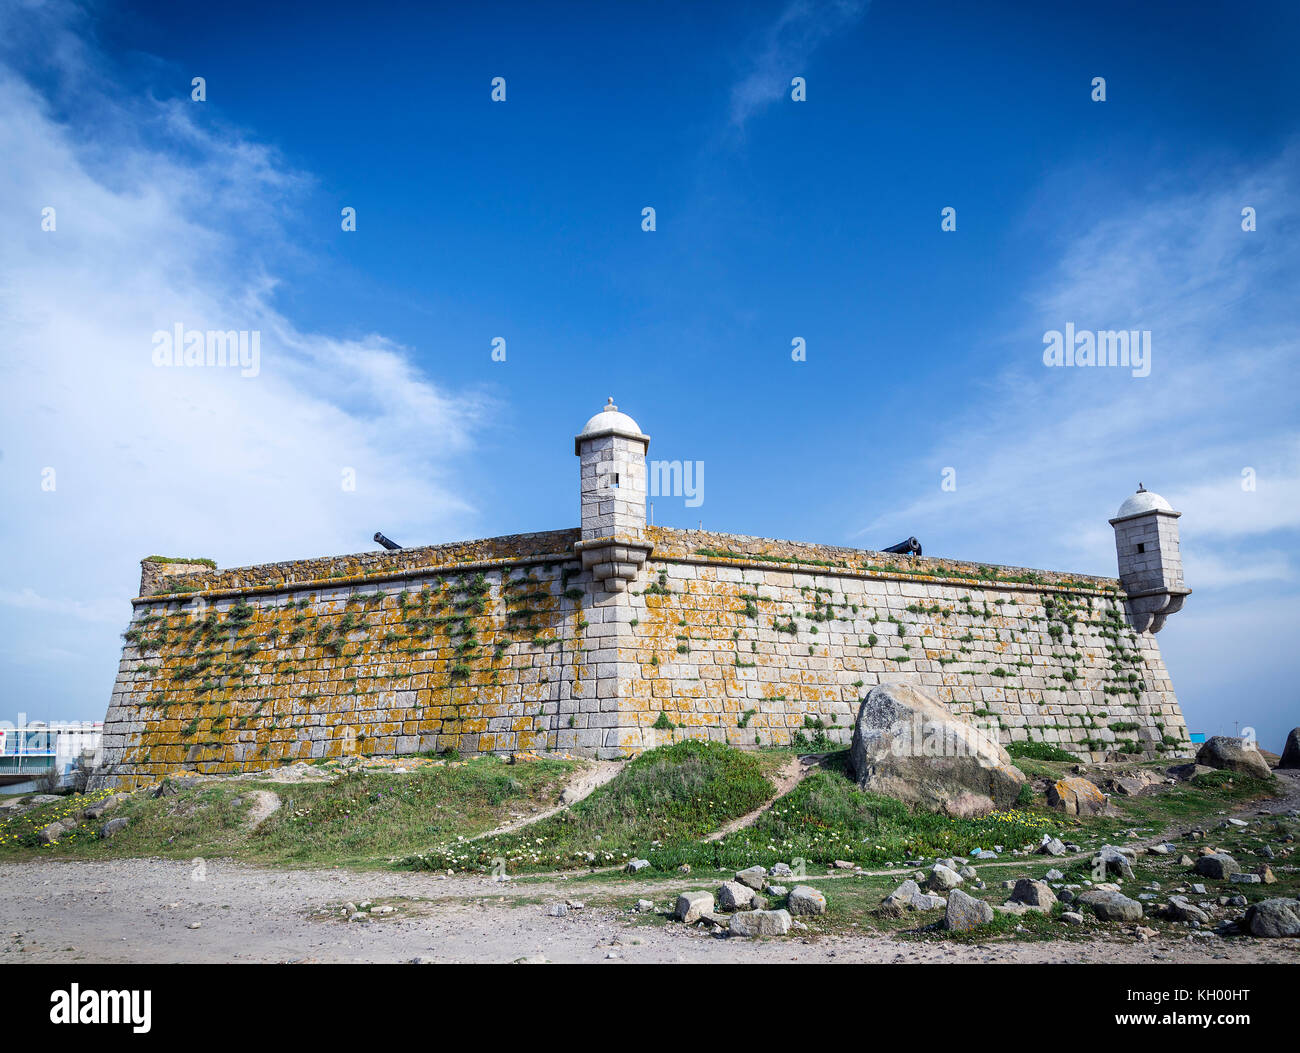 castelo do queijo coast fort landmark in foz beach area of porto portugal  Stock Photo - Alamy